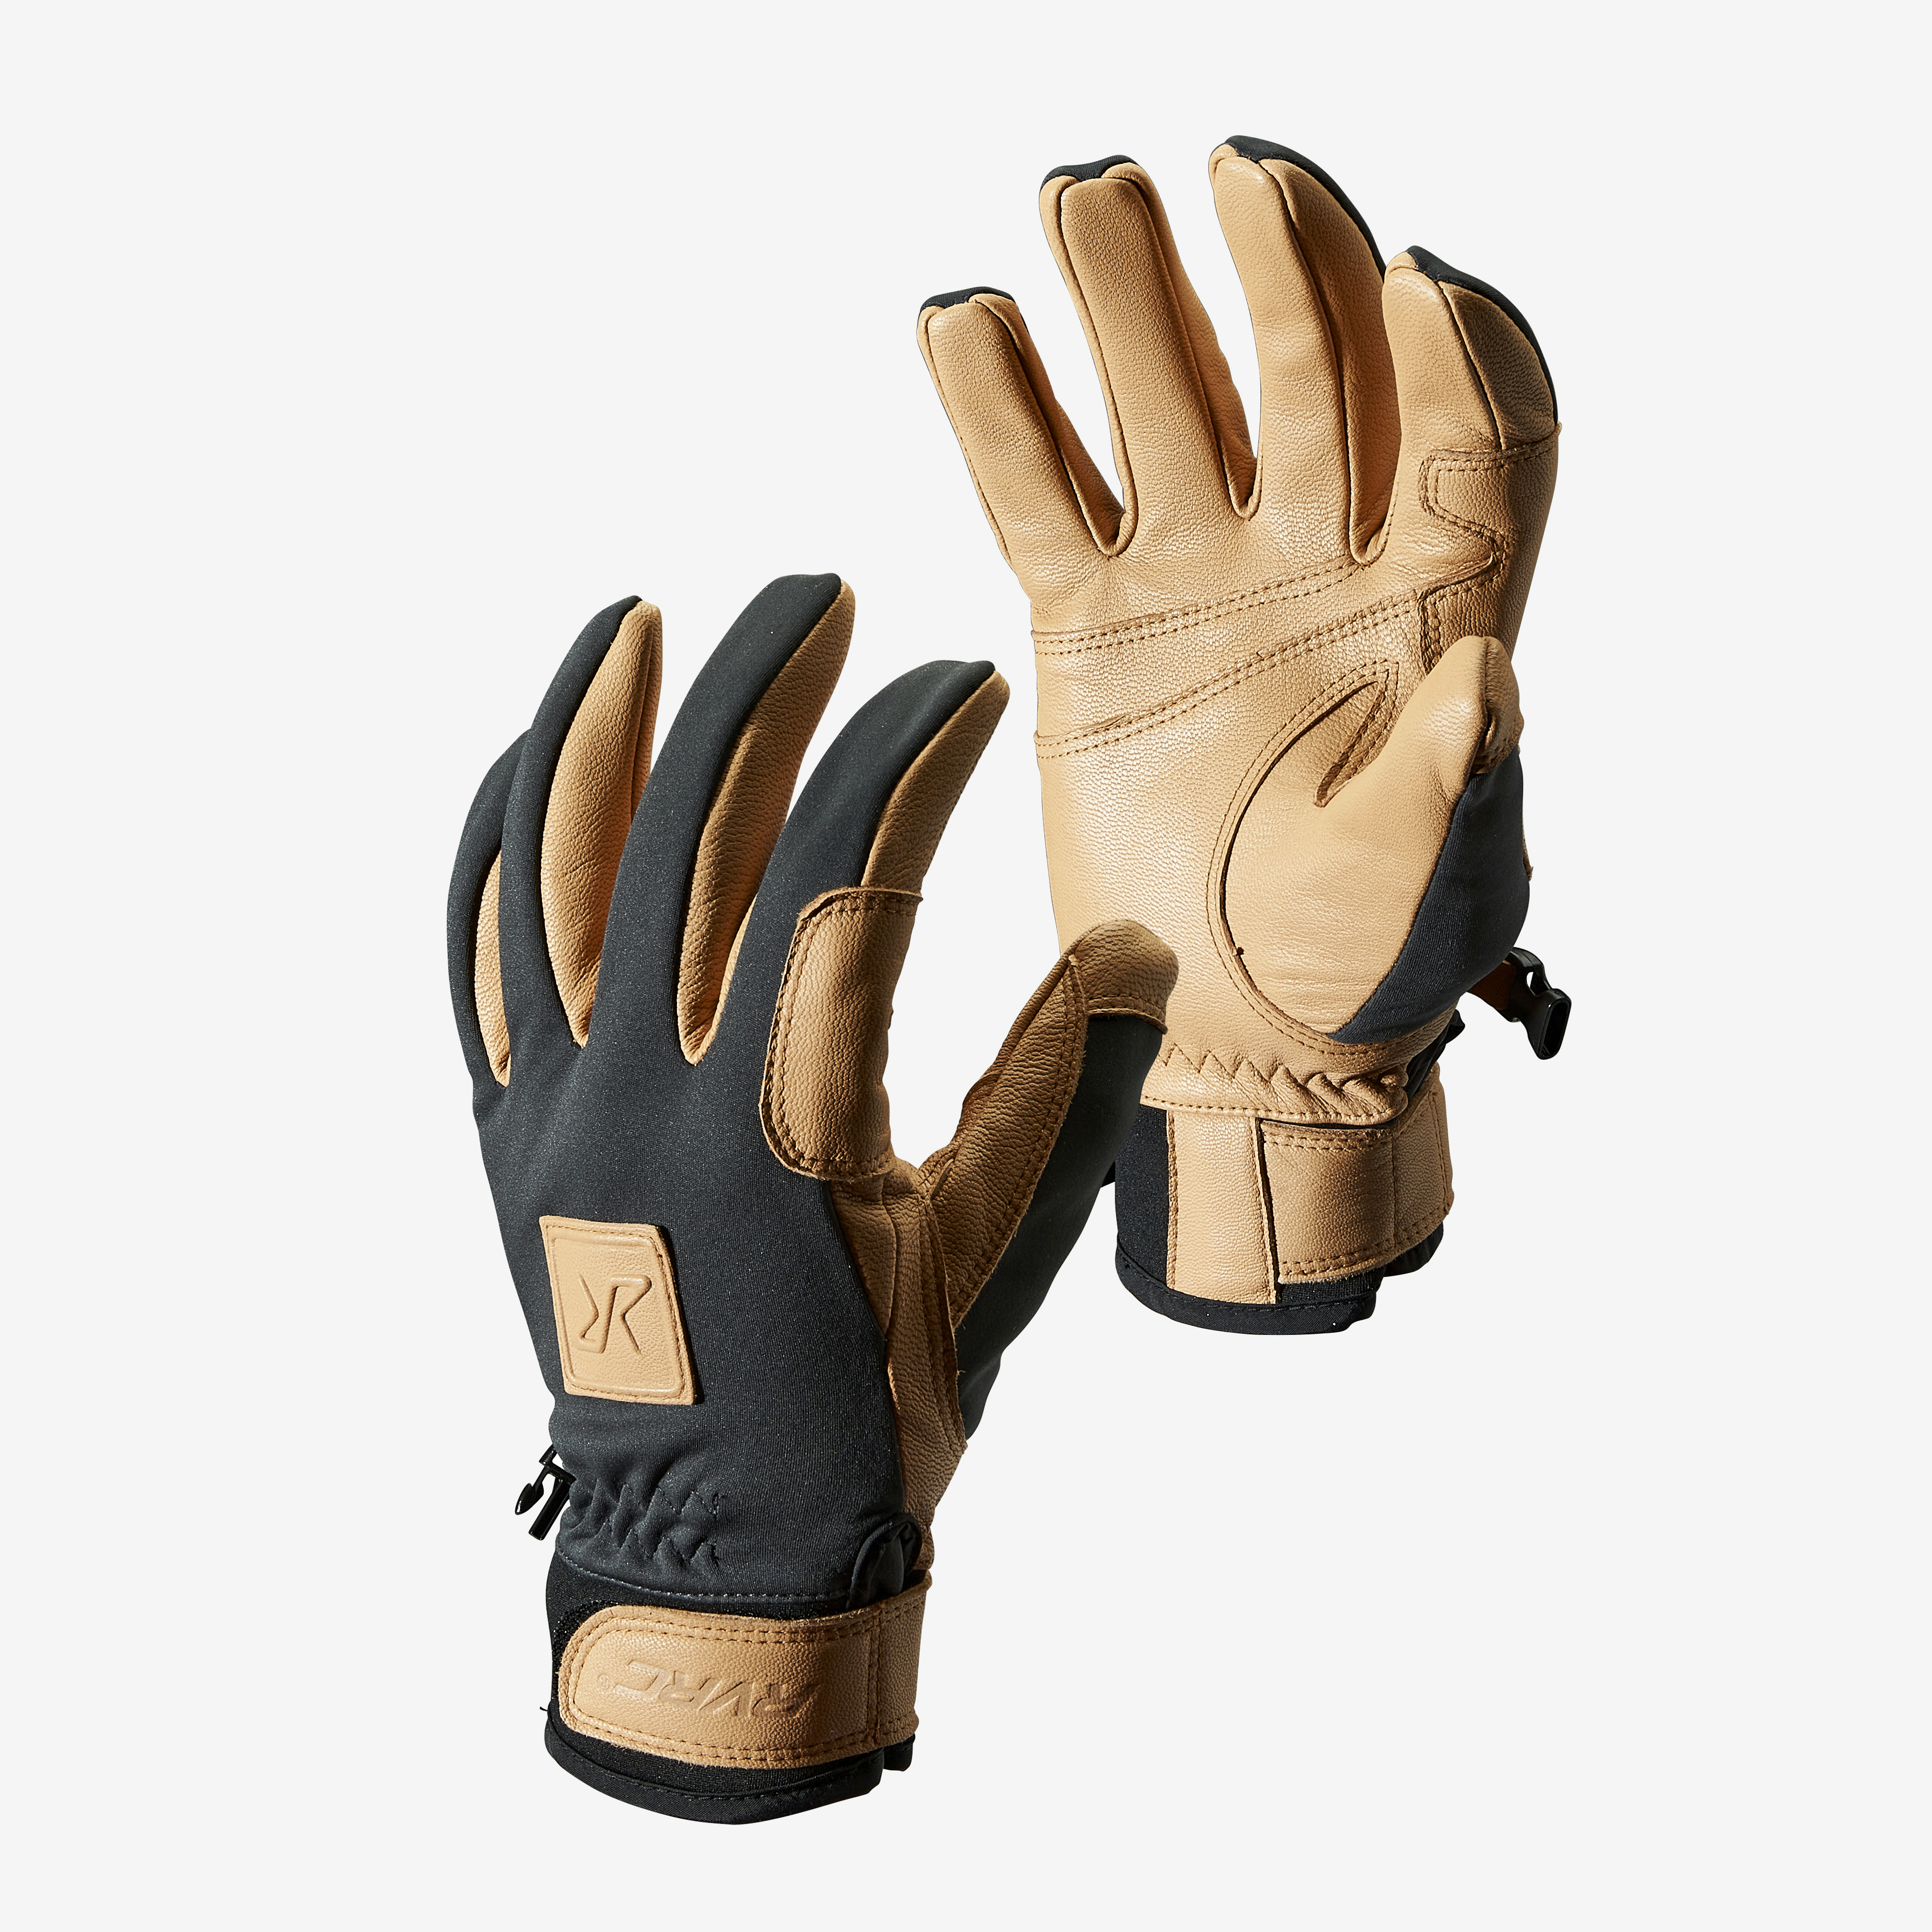 Outdoor Glove Unisex Tan/Anthracite Storlek:G8 – Accessoarer > Handskar